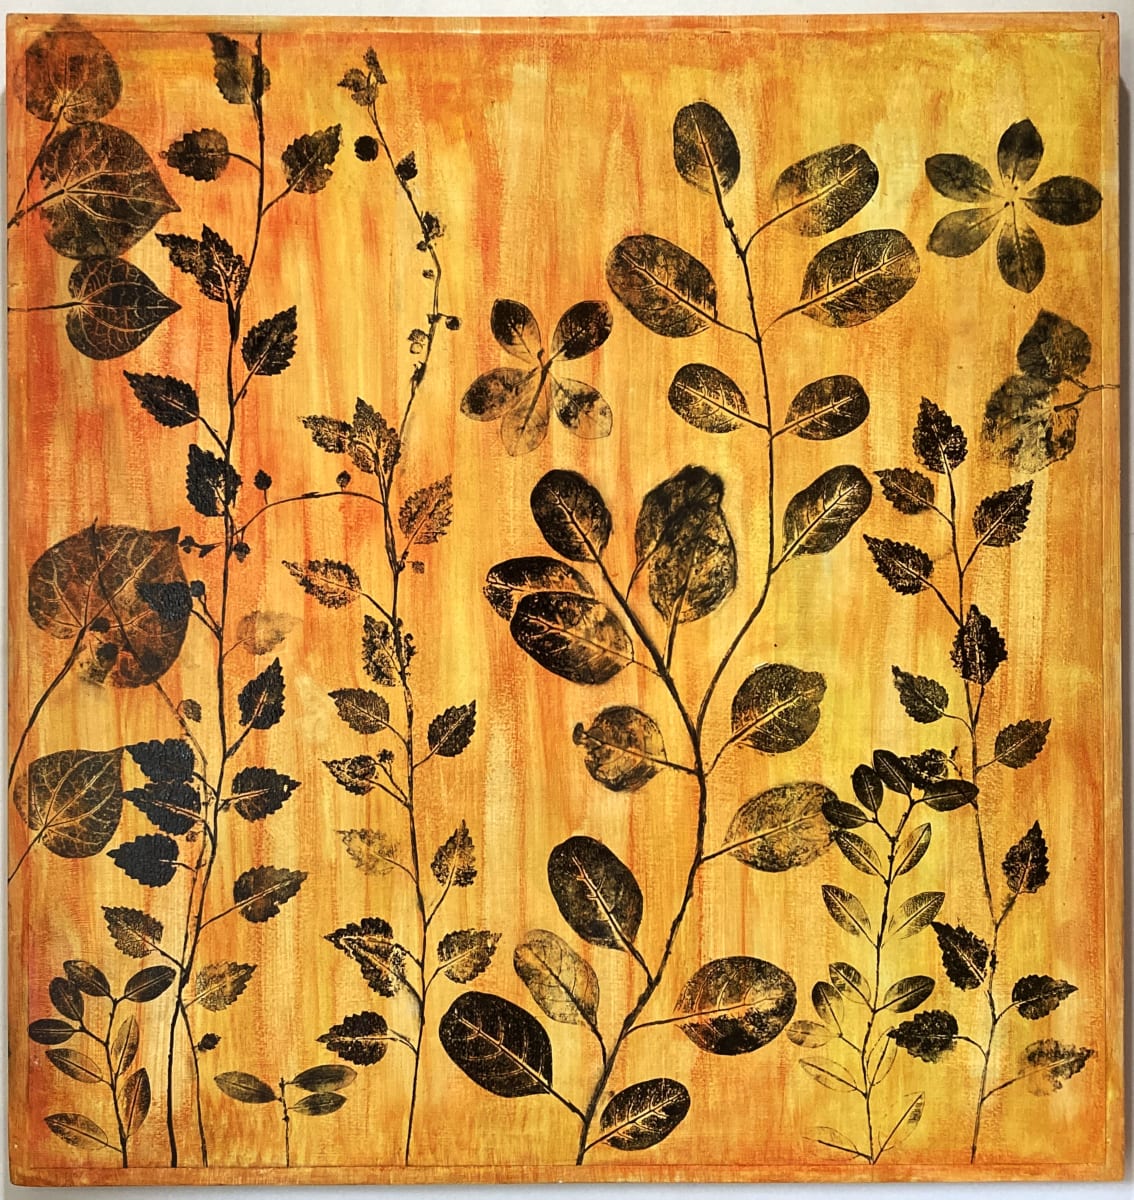 T  Ā  N  E     IV,  2023, 815 x 805mm, collection: artist by Dr  Rangihiroa Panoho  Image: Anake ko ngā rau o te rākau Māori no taku mara kei kōnei. 'Only native leaves from my garden were used'  in this work.